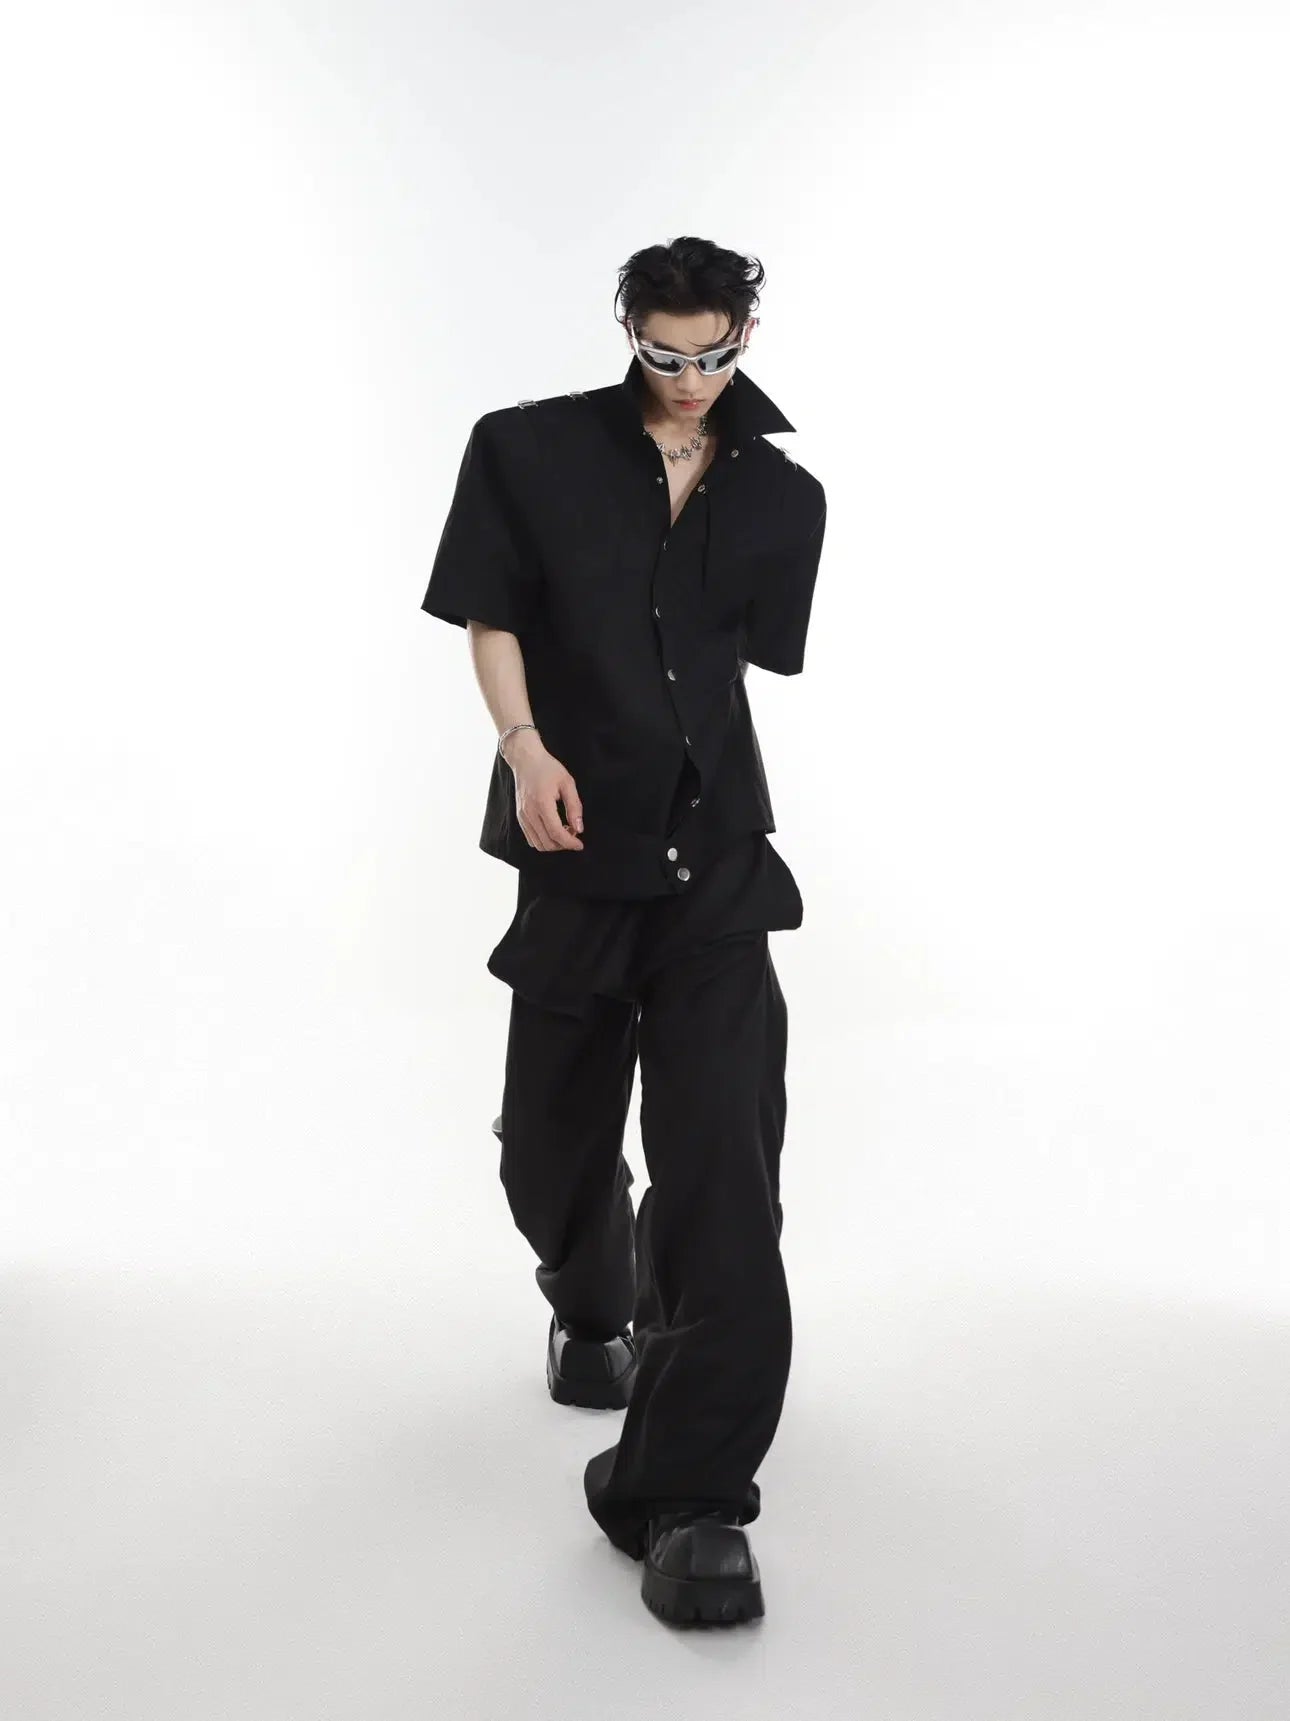 Shoulder Multiple Strap Belts Shirt Korean Street Fashion Shirt By Argue Culture Shop Online at OH Vault